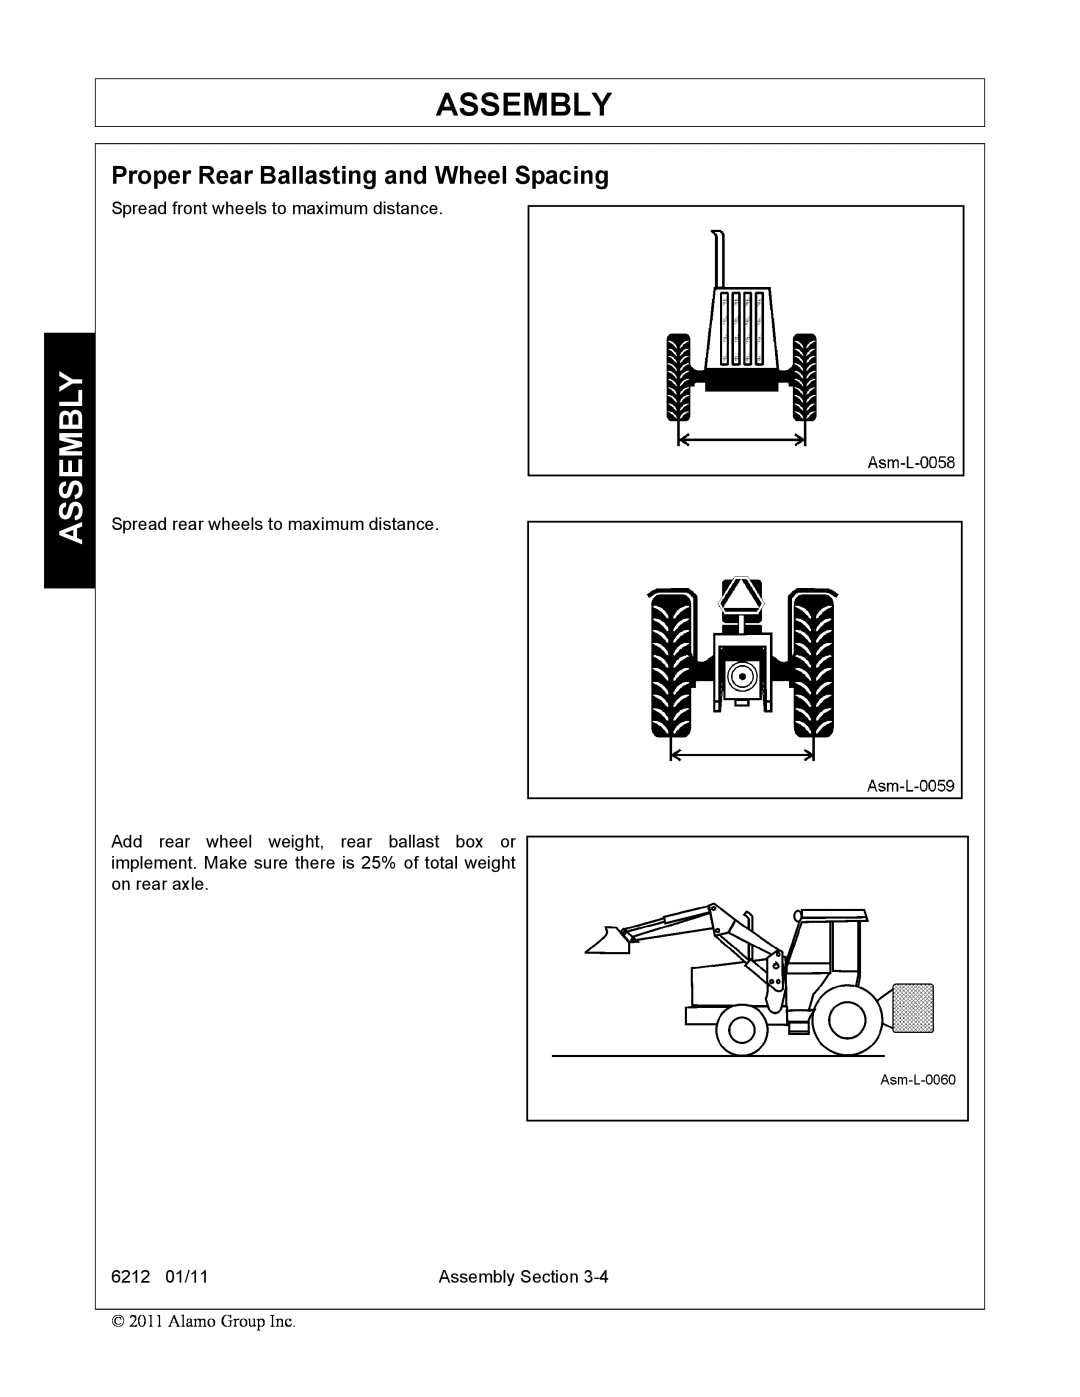 Alamo 6212 manual Assembly, Proper Rear Ballasting and Wheel Spacing 